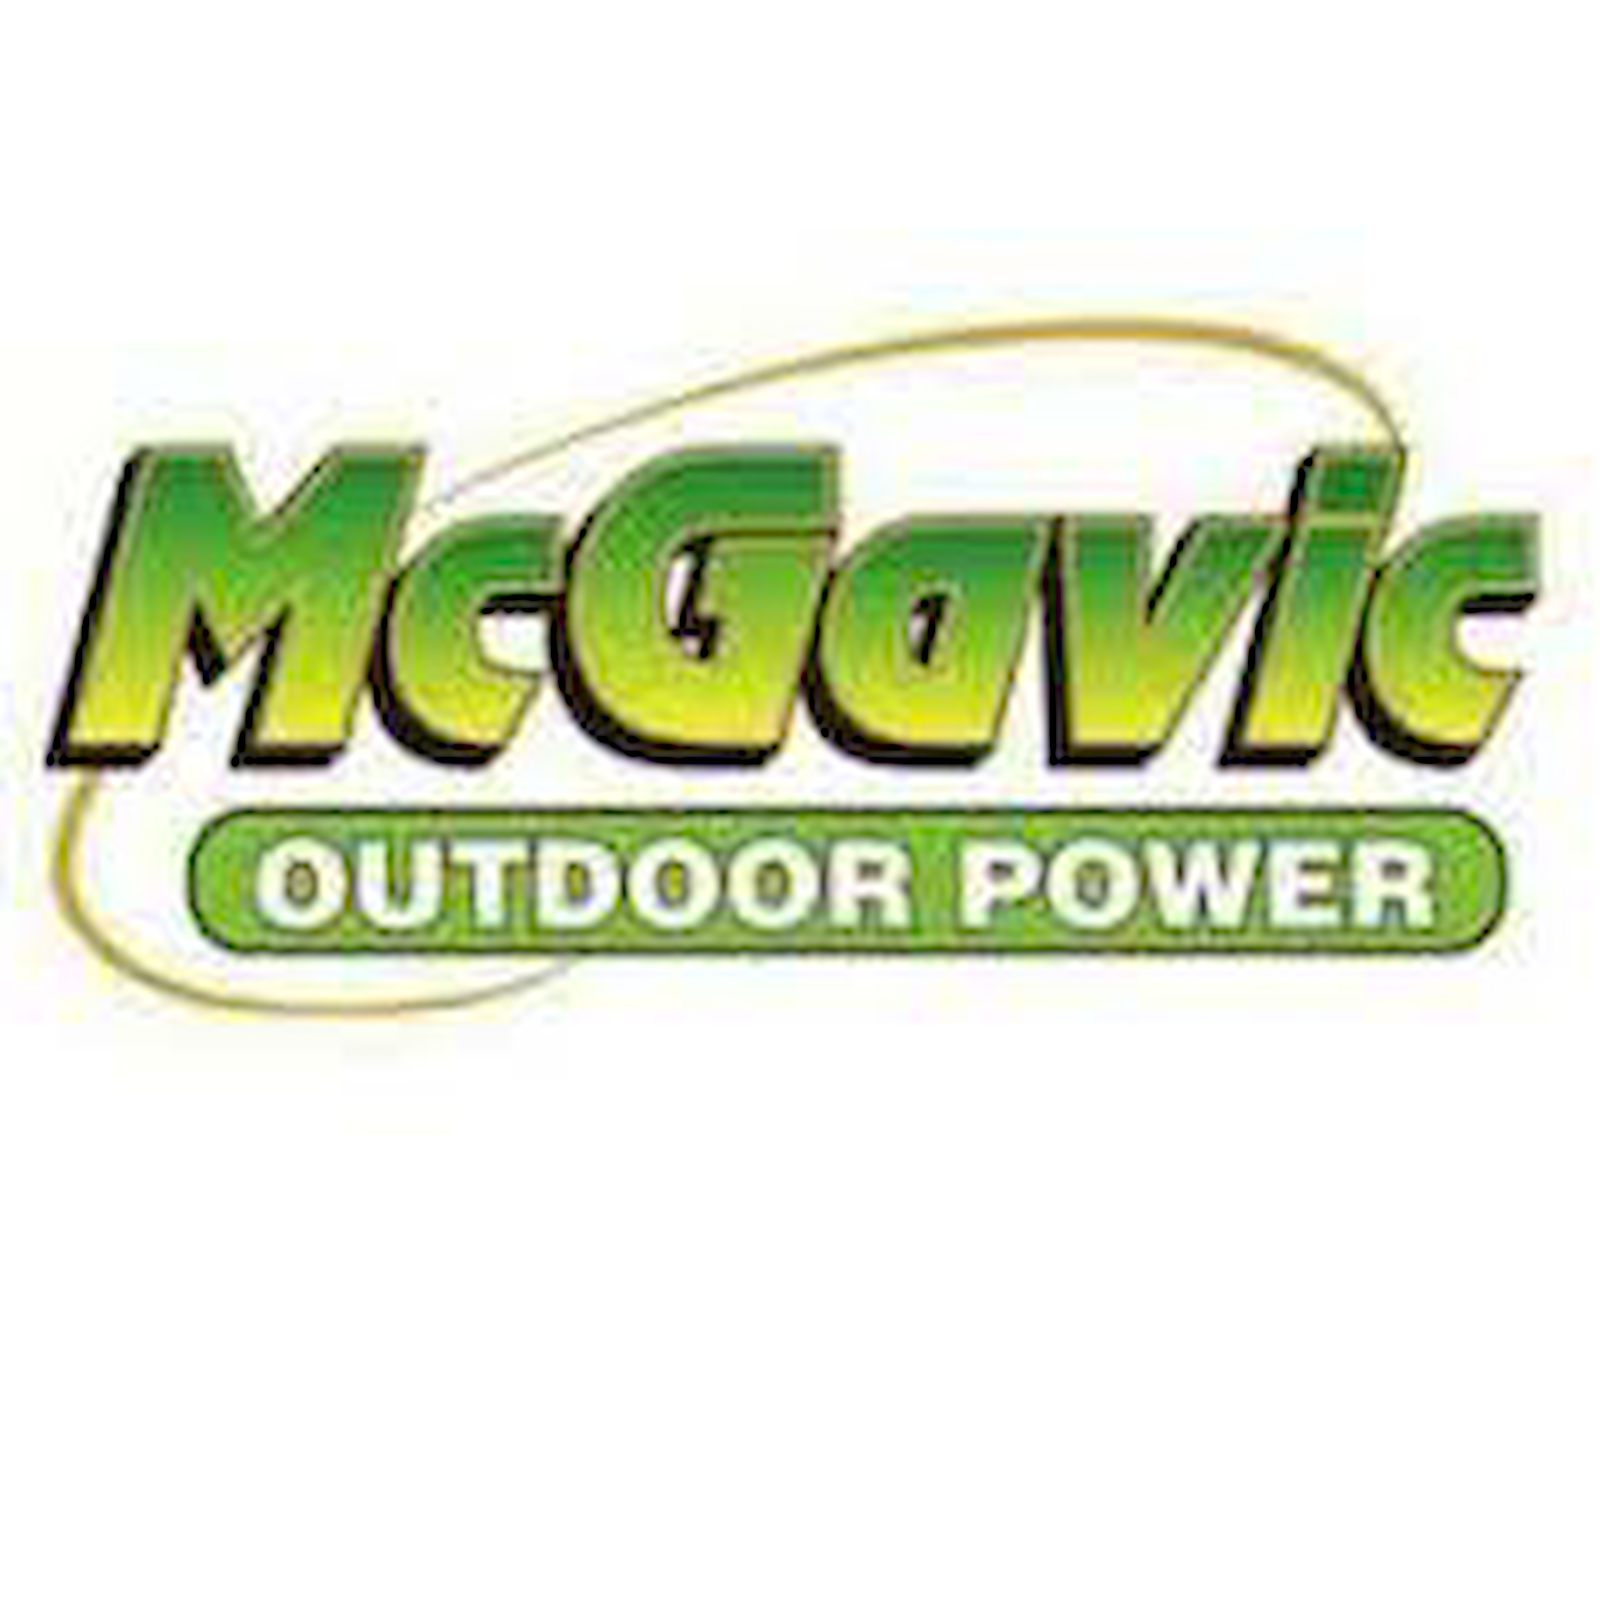 McGavic Outdoor Power